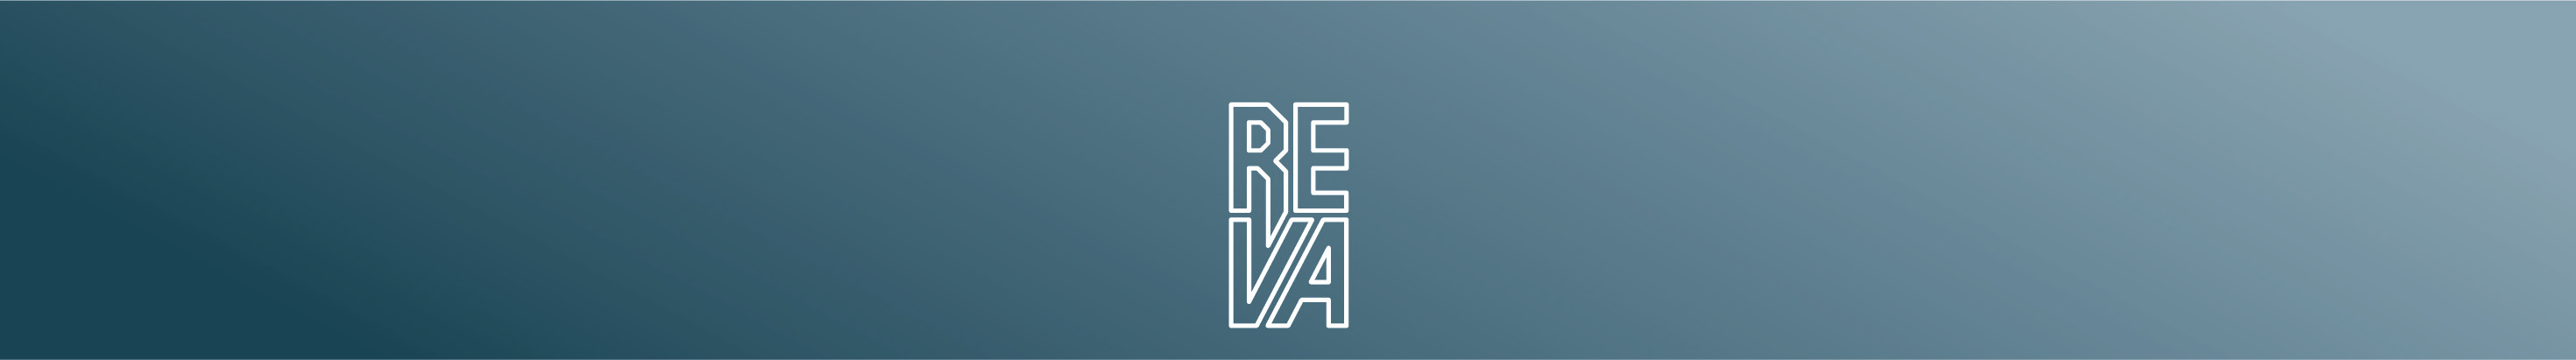 Danil Reva's profile banner